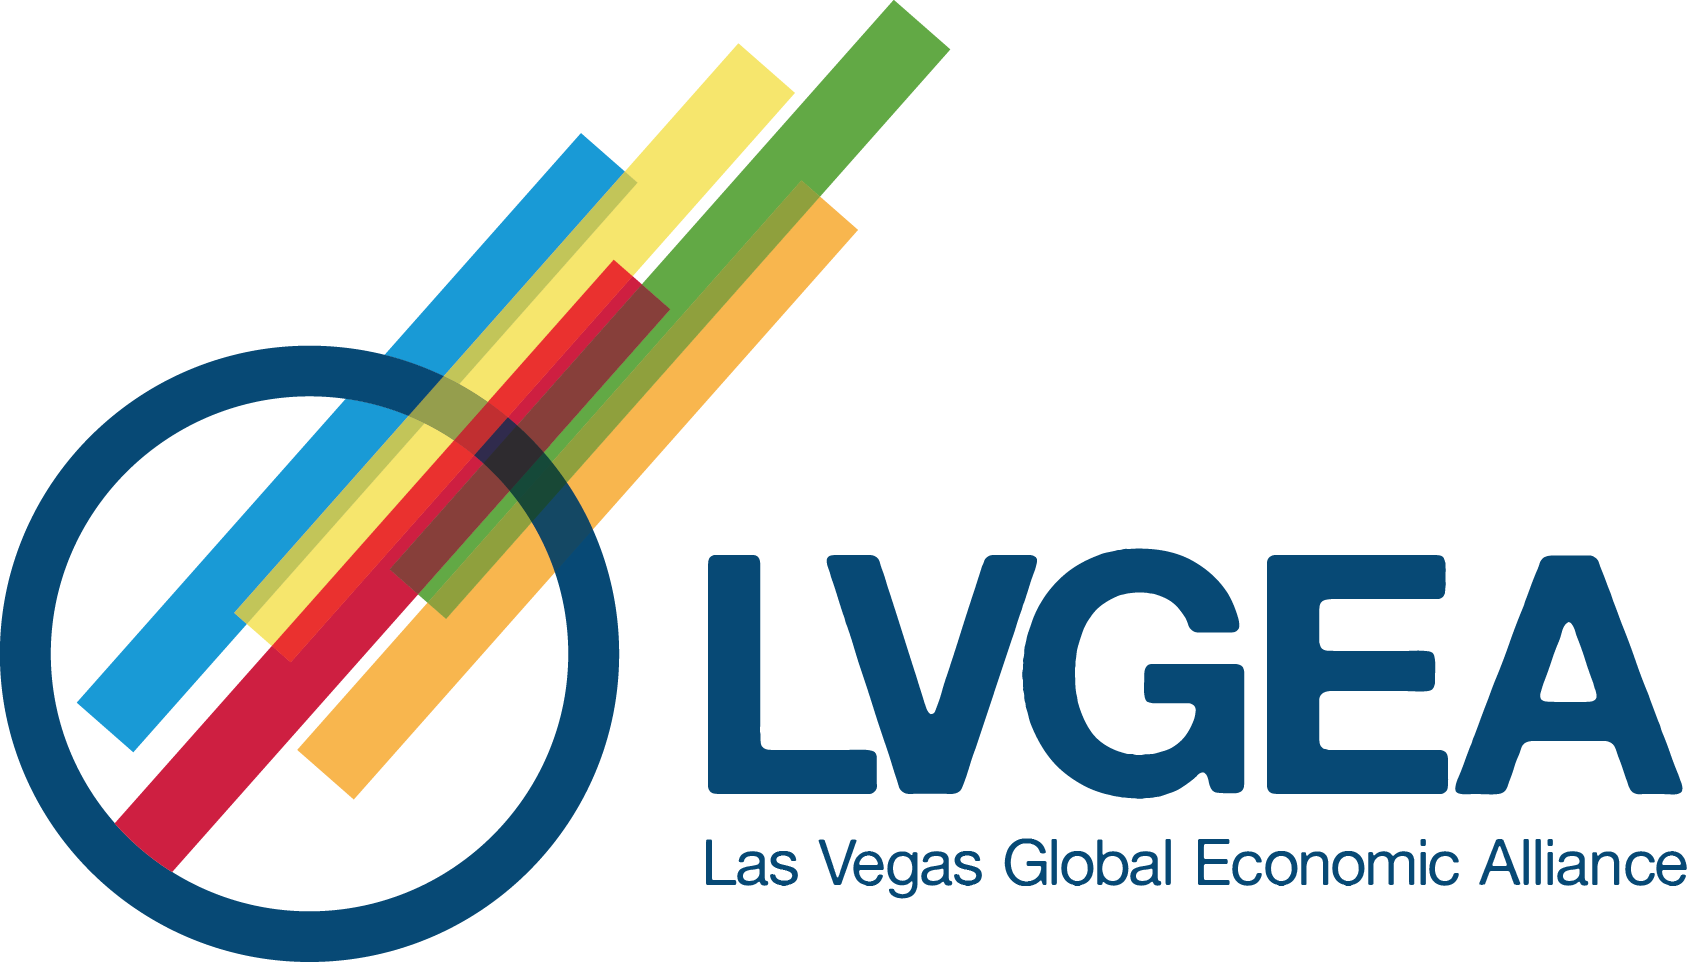 Las Vegas Global Economic Alliance